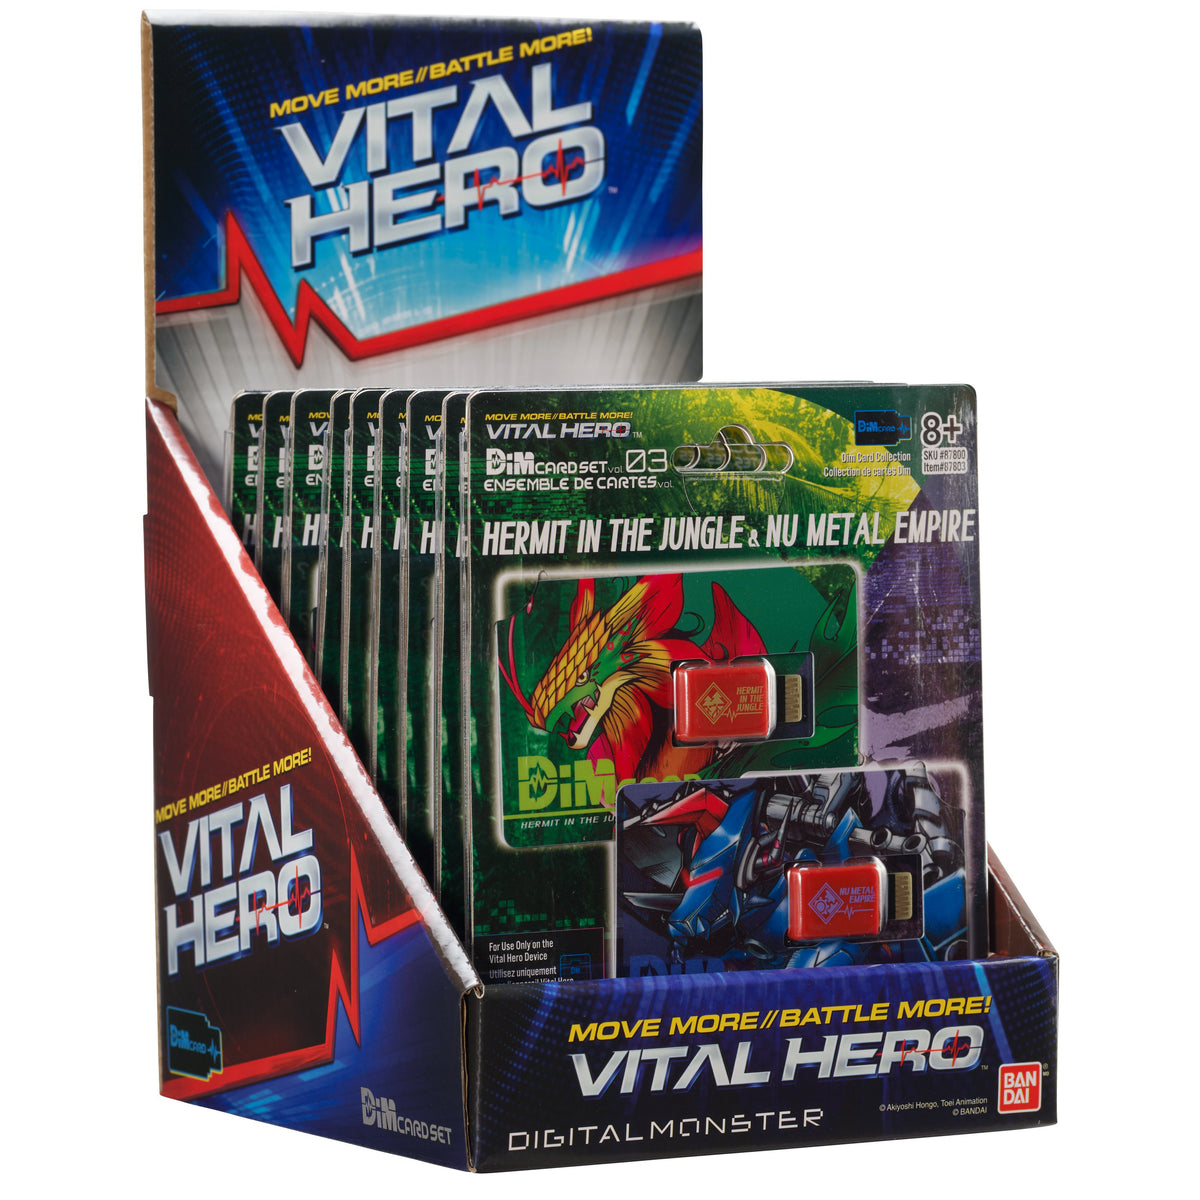 Vital Hero DIM Card Pack (Hermit in the Jungle & Nu Metal Empire)